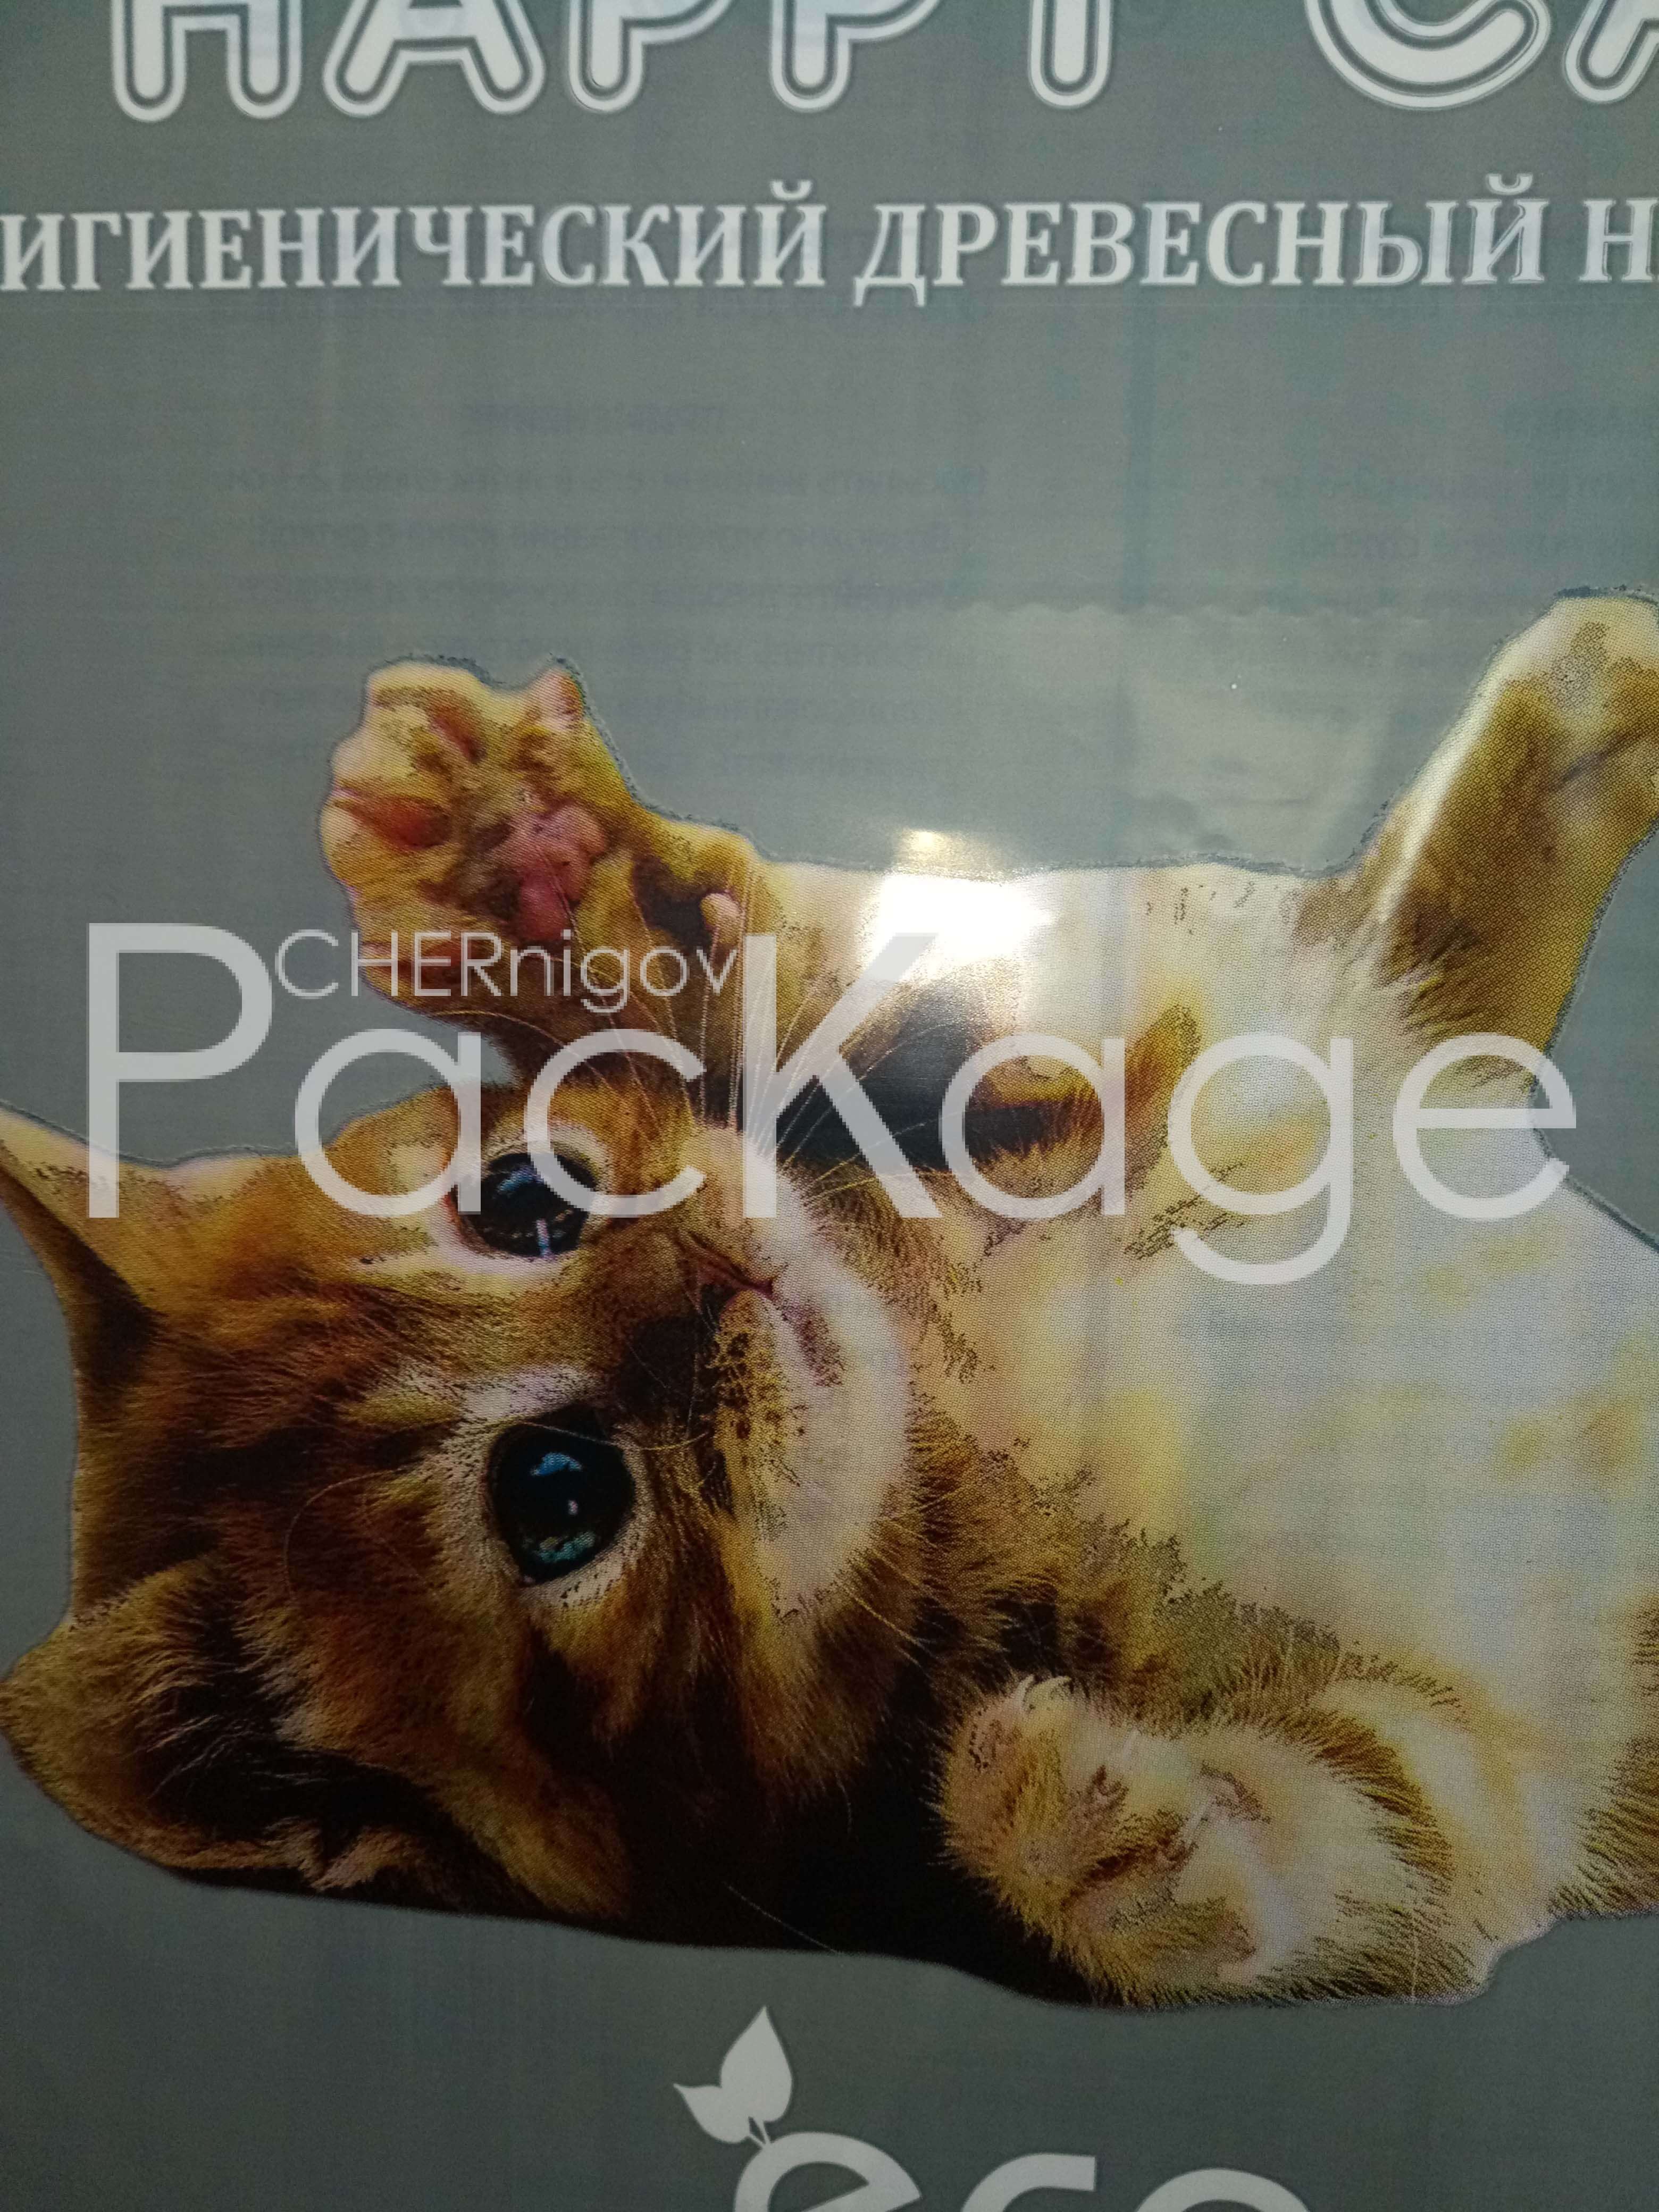 Как создается дизайн пакета Chernigov Package - Photo P70310-110443